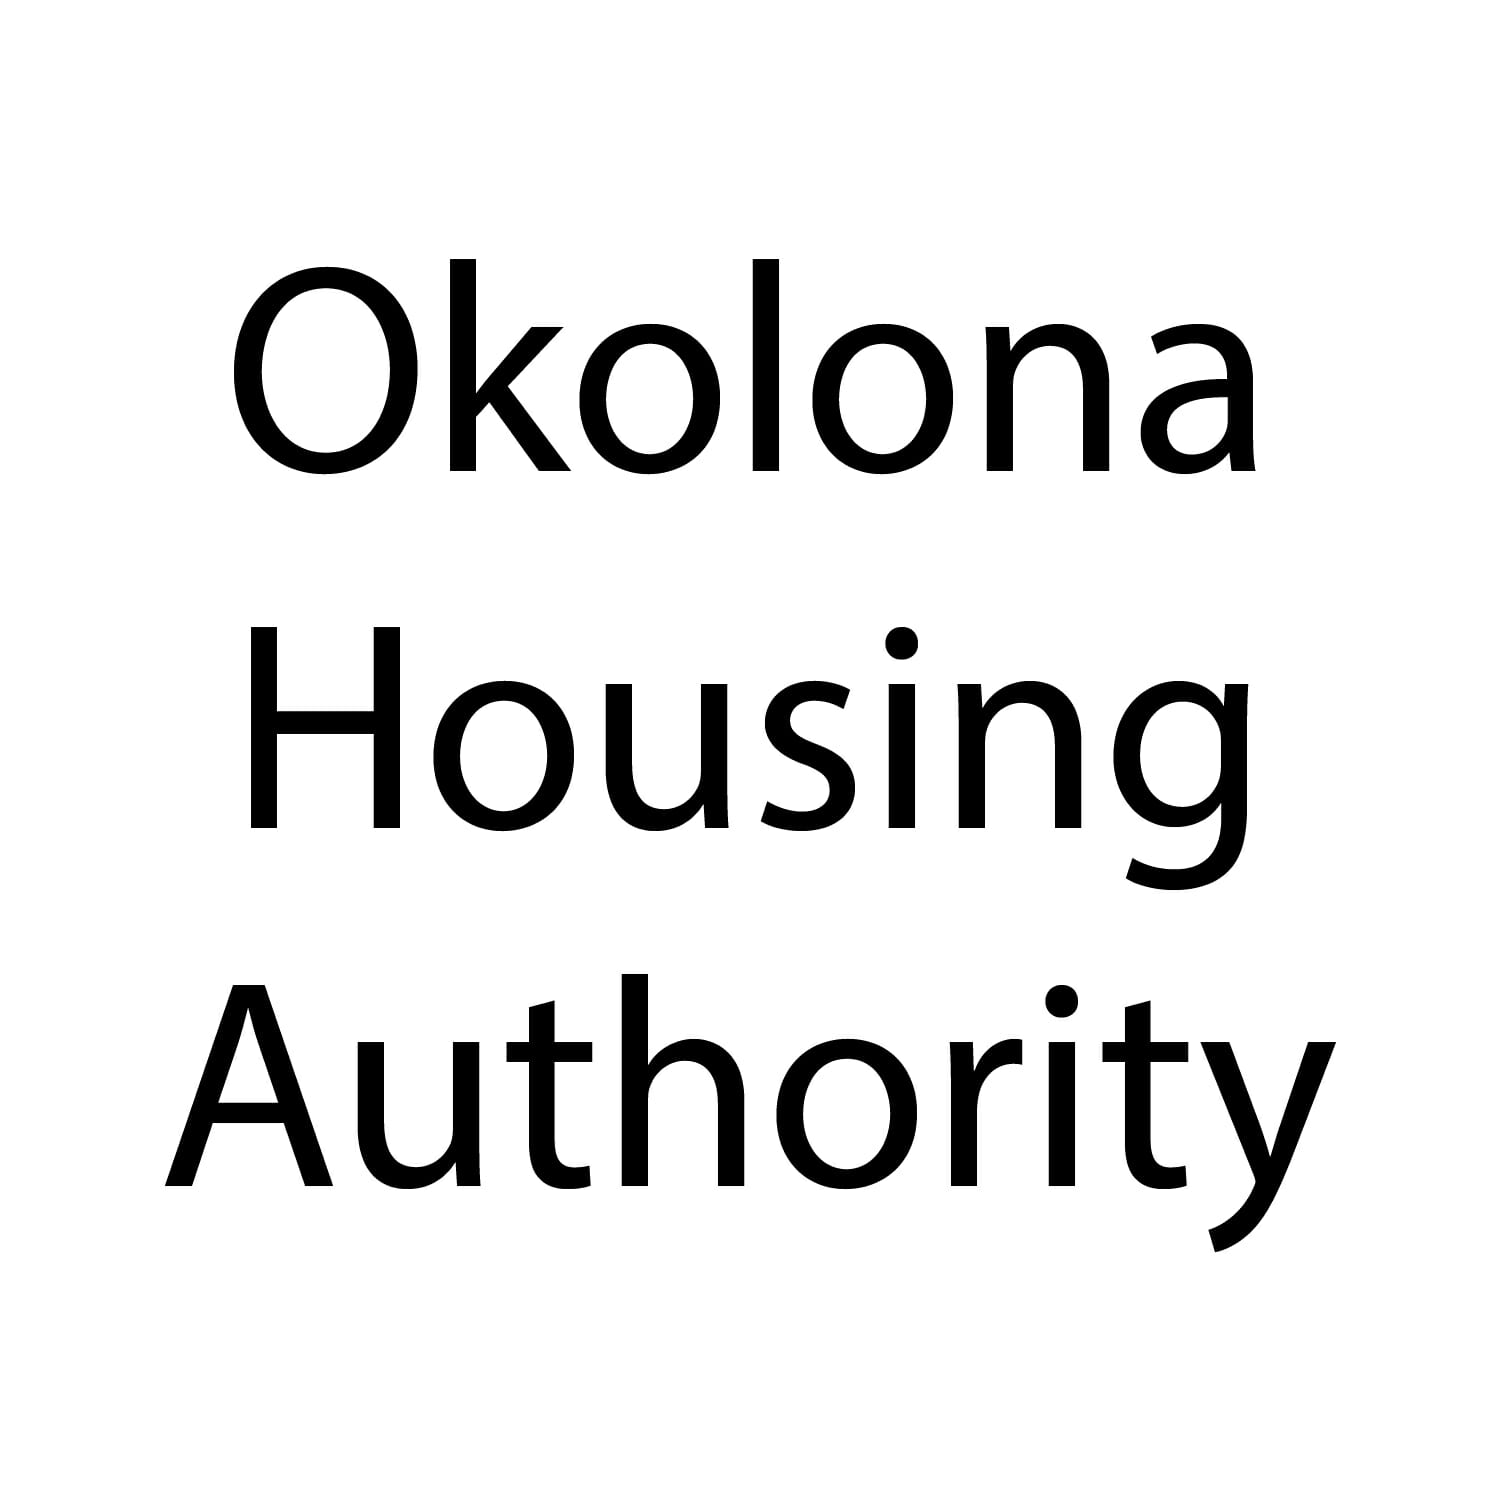 Okolona Housing Authority